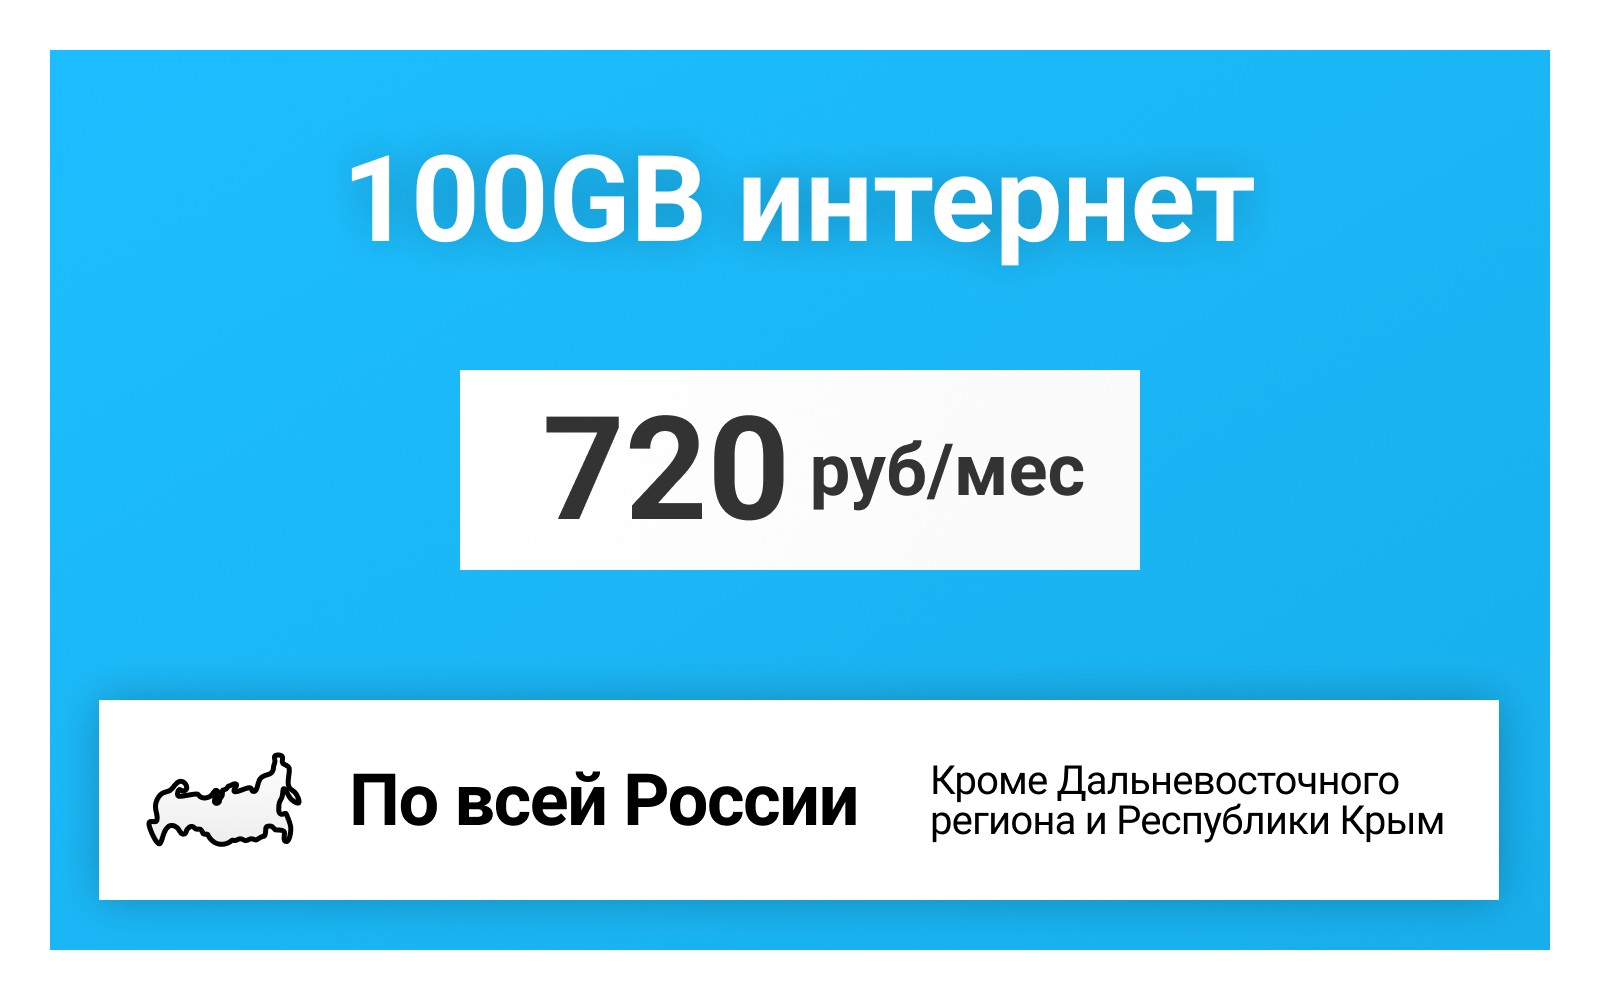 Сим-карта / 100GB - 720 р/мес. Интернет тариф для модема телефона (вся Россия)